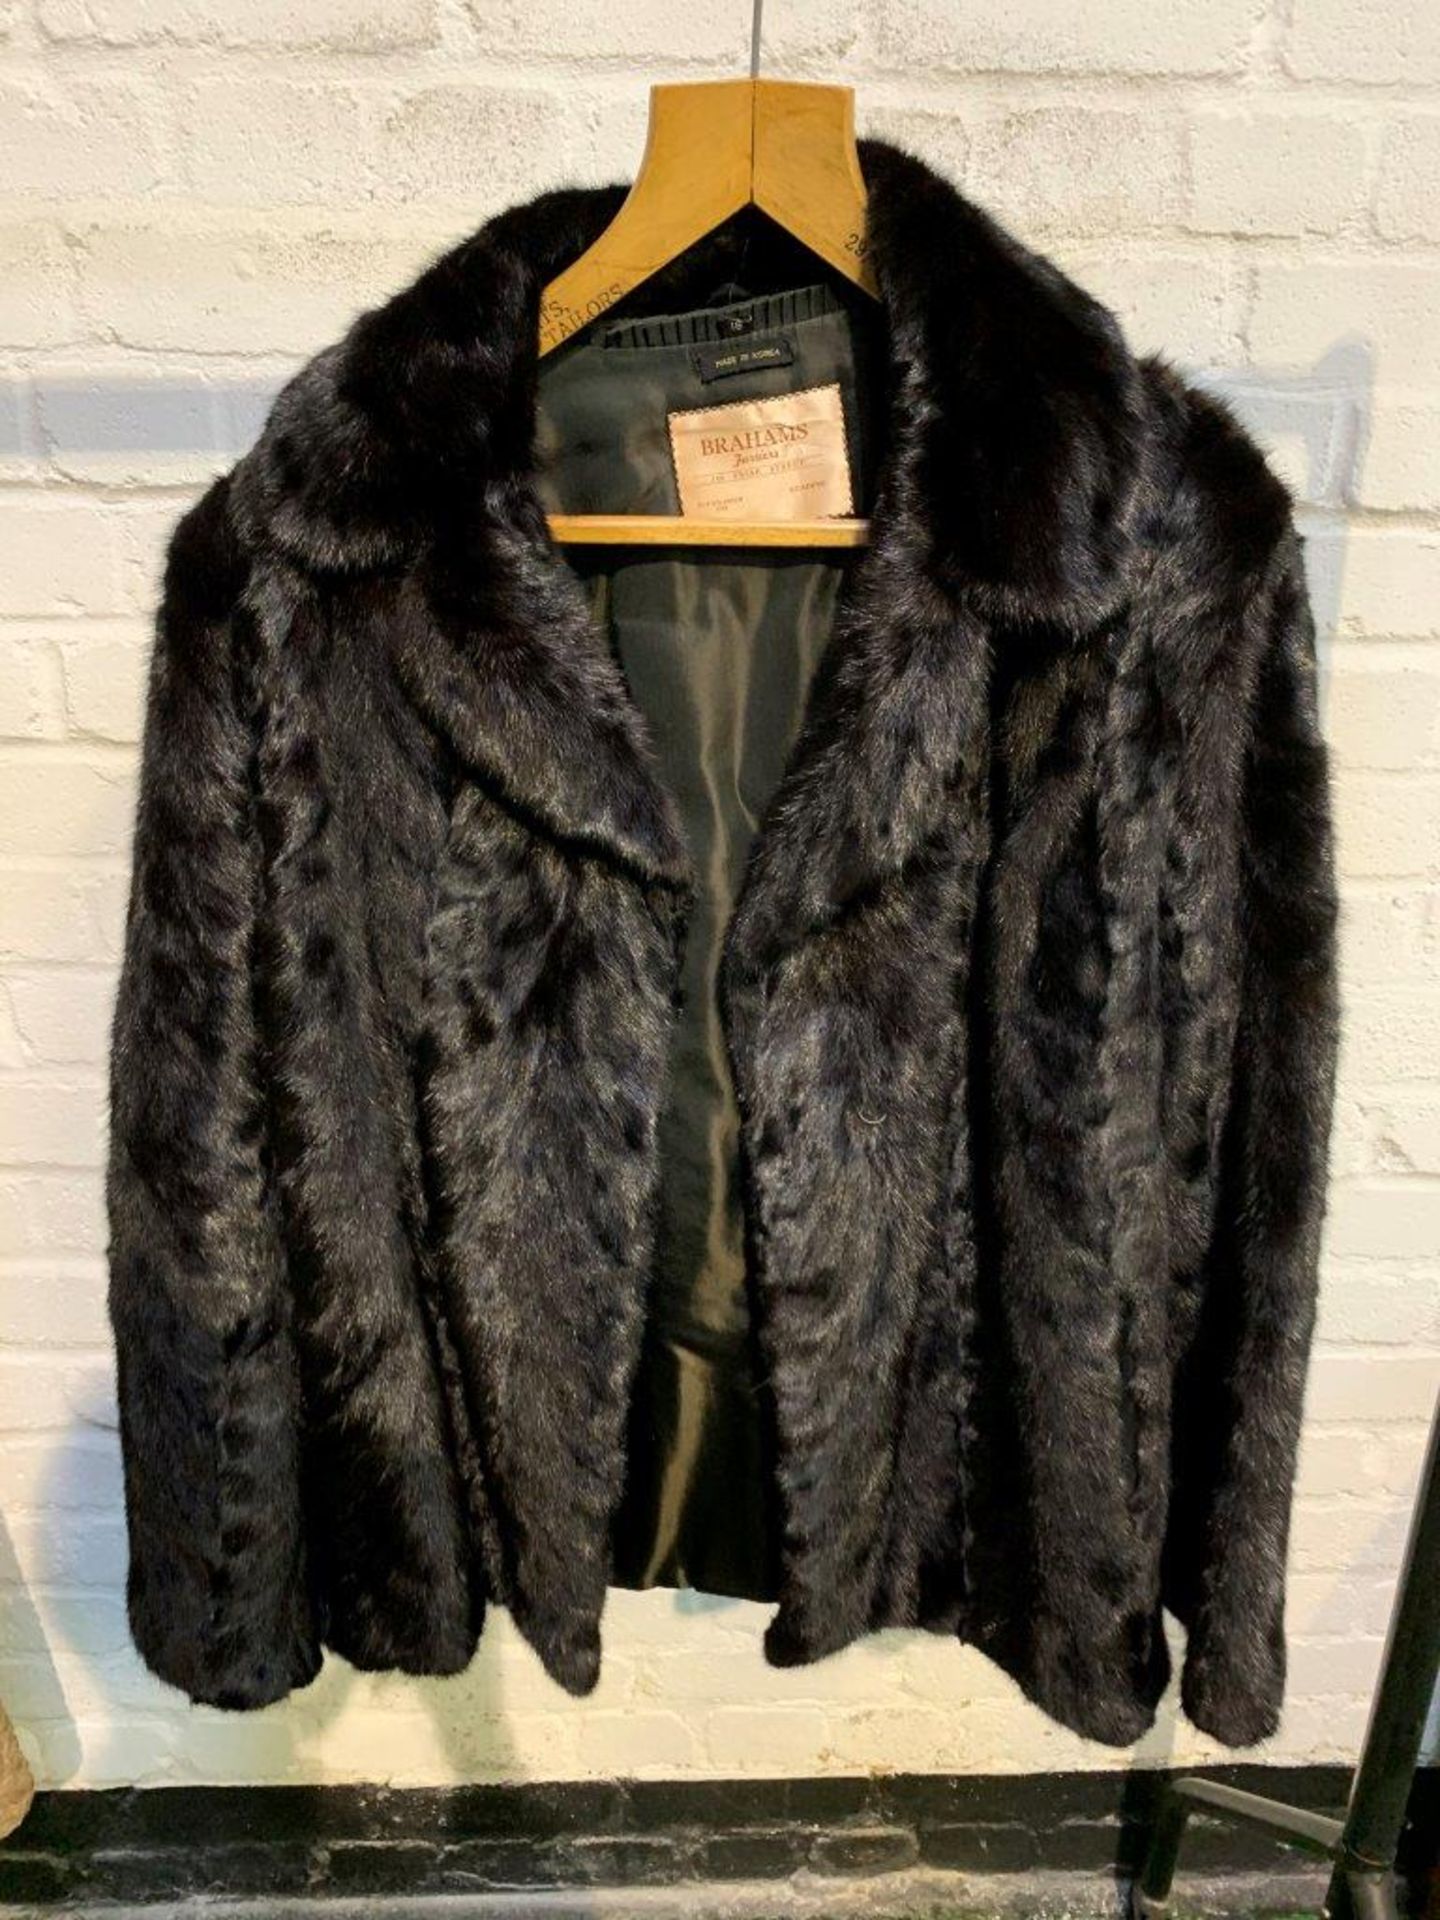 A Brahams of Reading black mink jacket and a full length black mink coat.